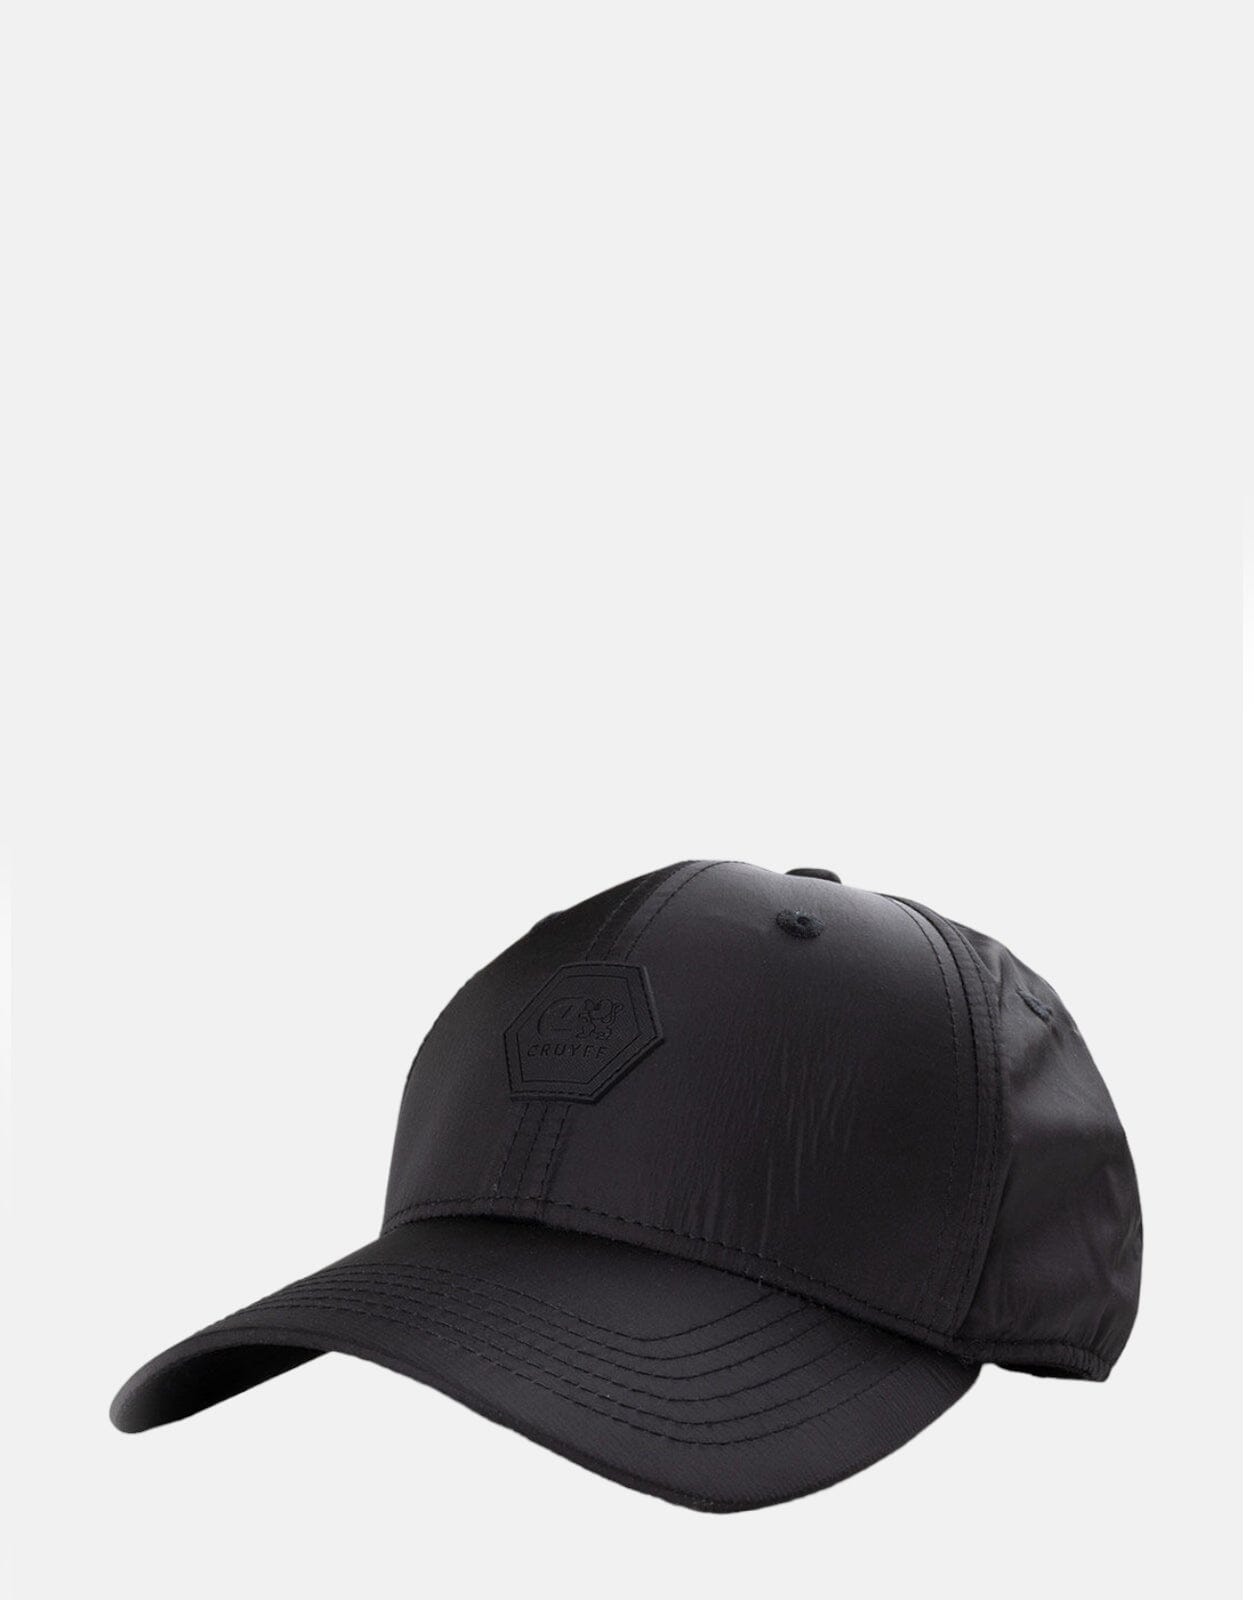 Cruyff Scott Pitch Black Cap - Subwear